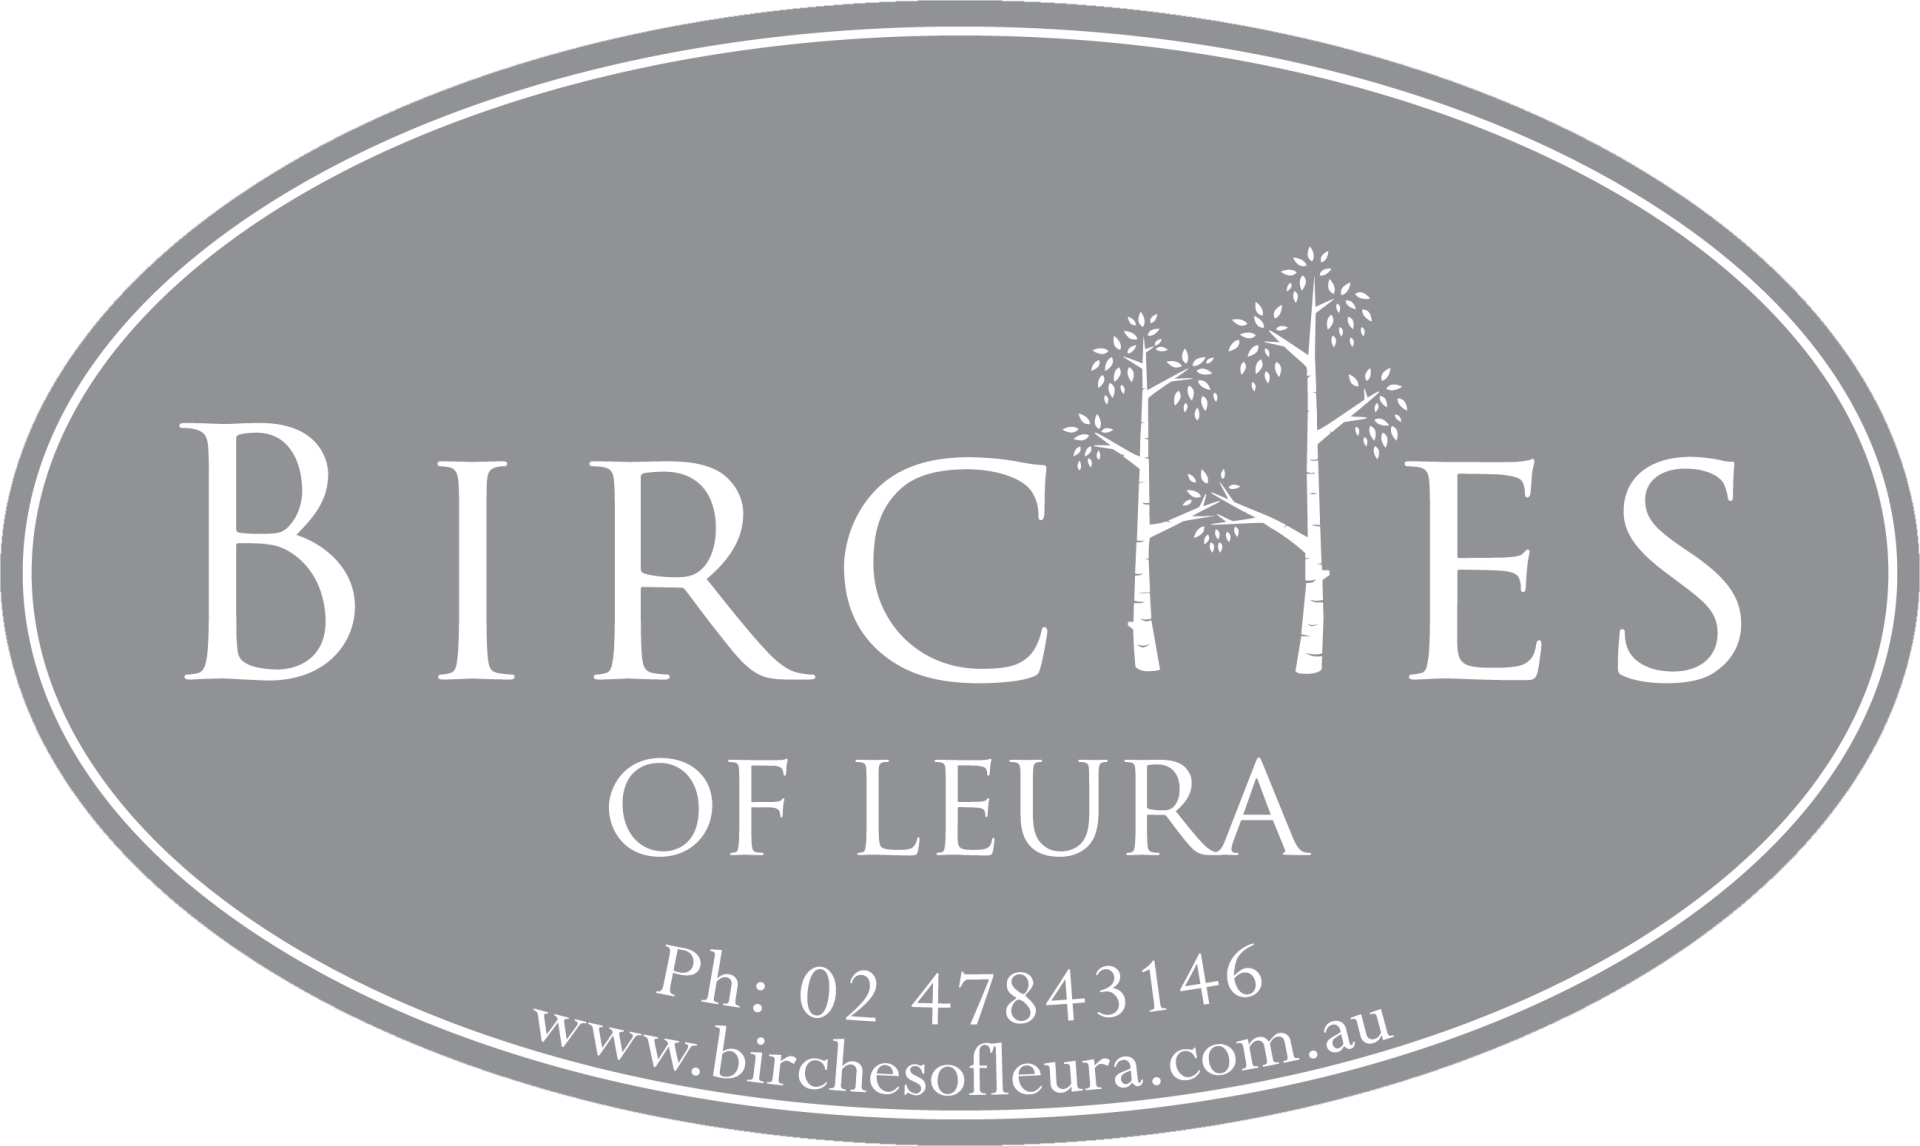 Birches of leura